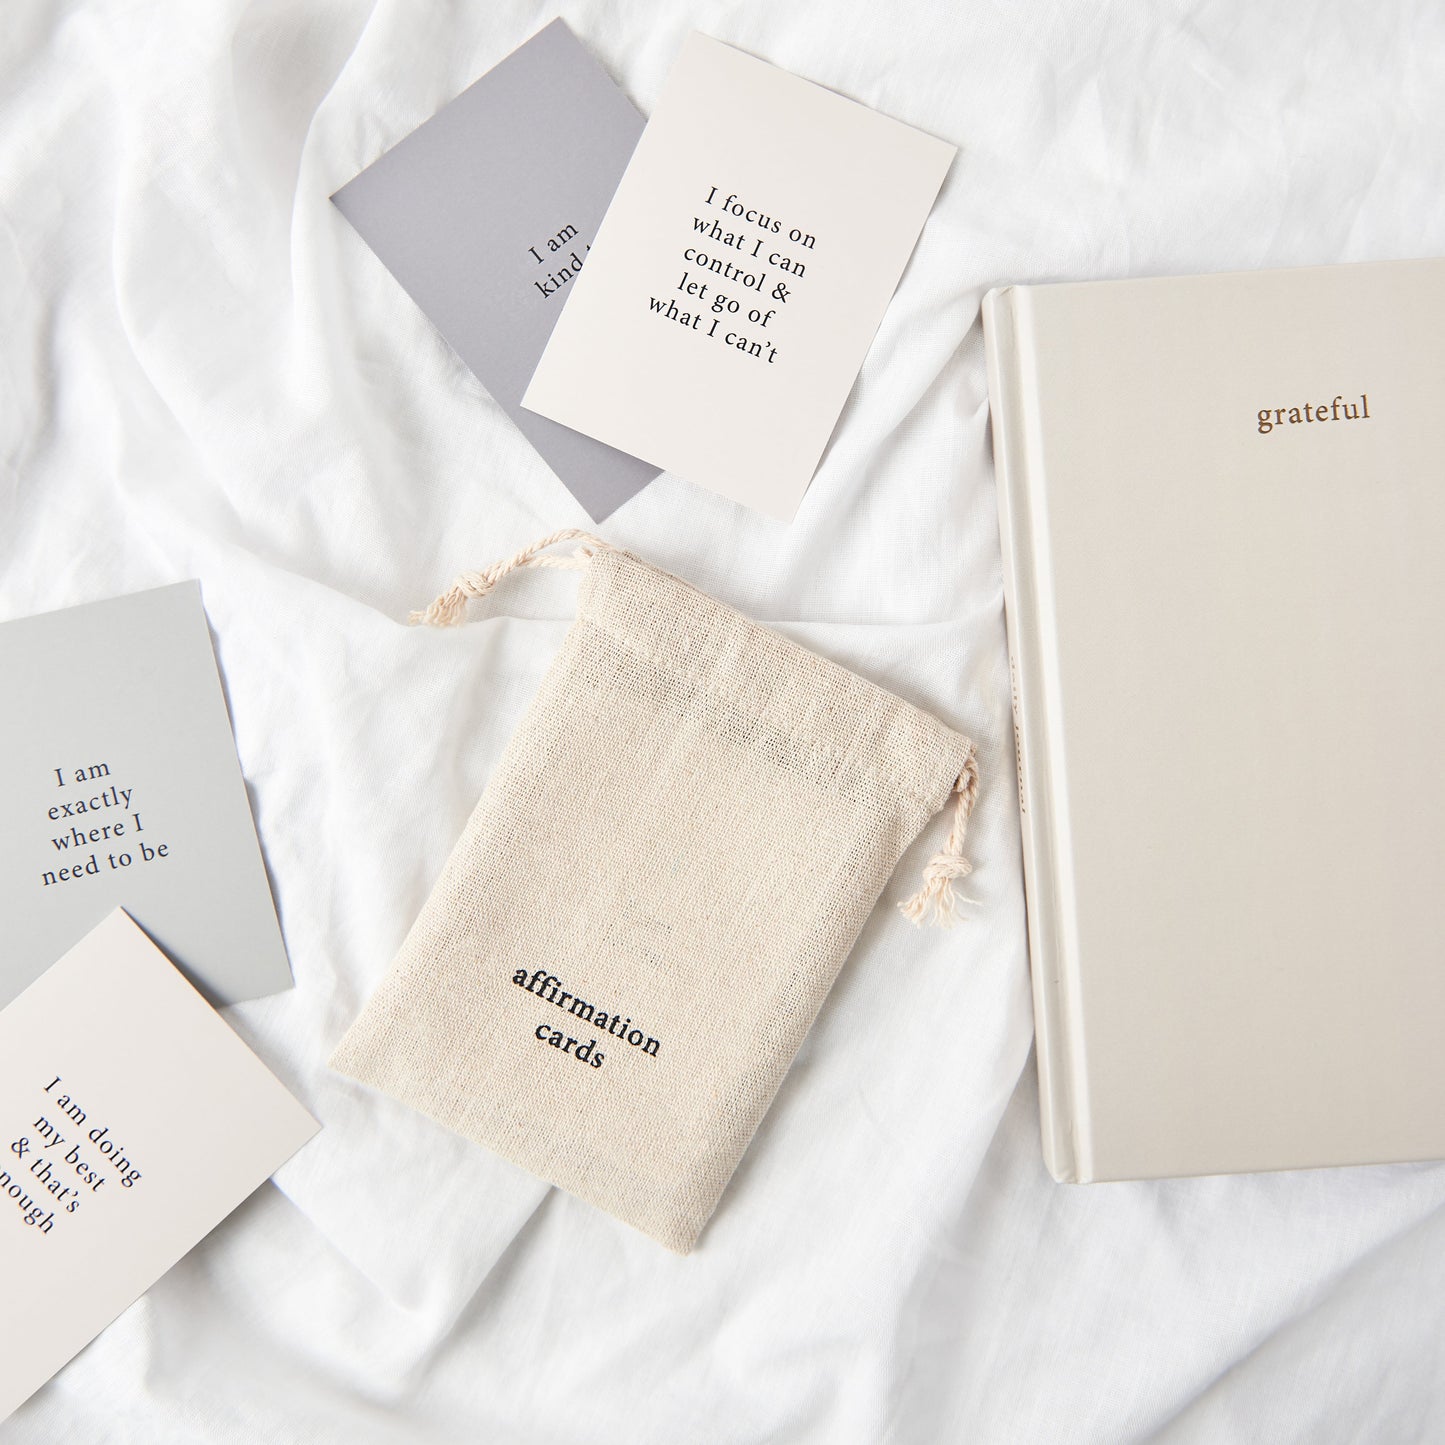 A set of affirmation cards, a bag an gratitude journal sitting on a bed